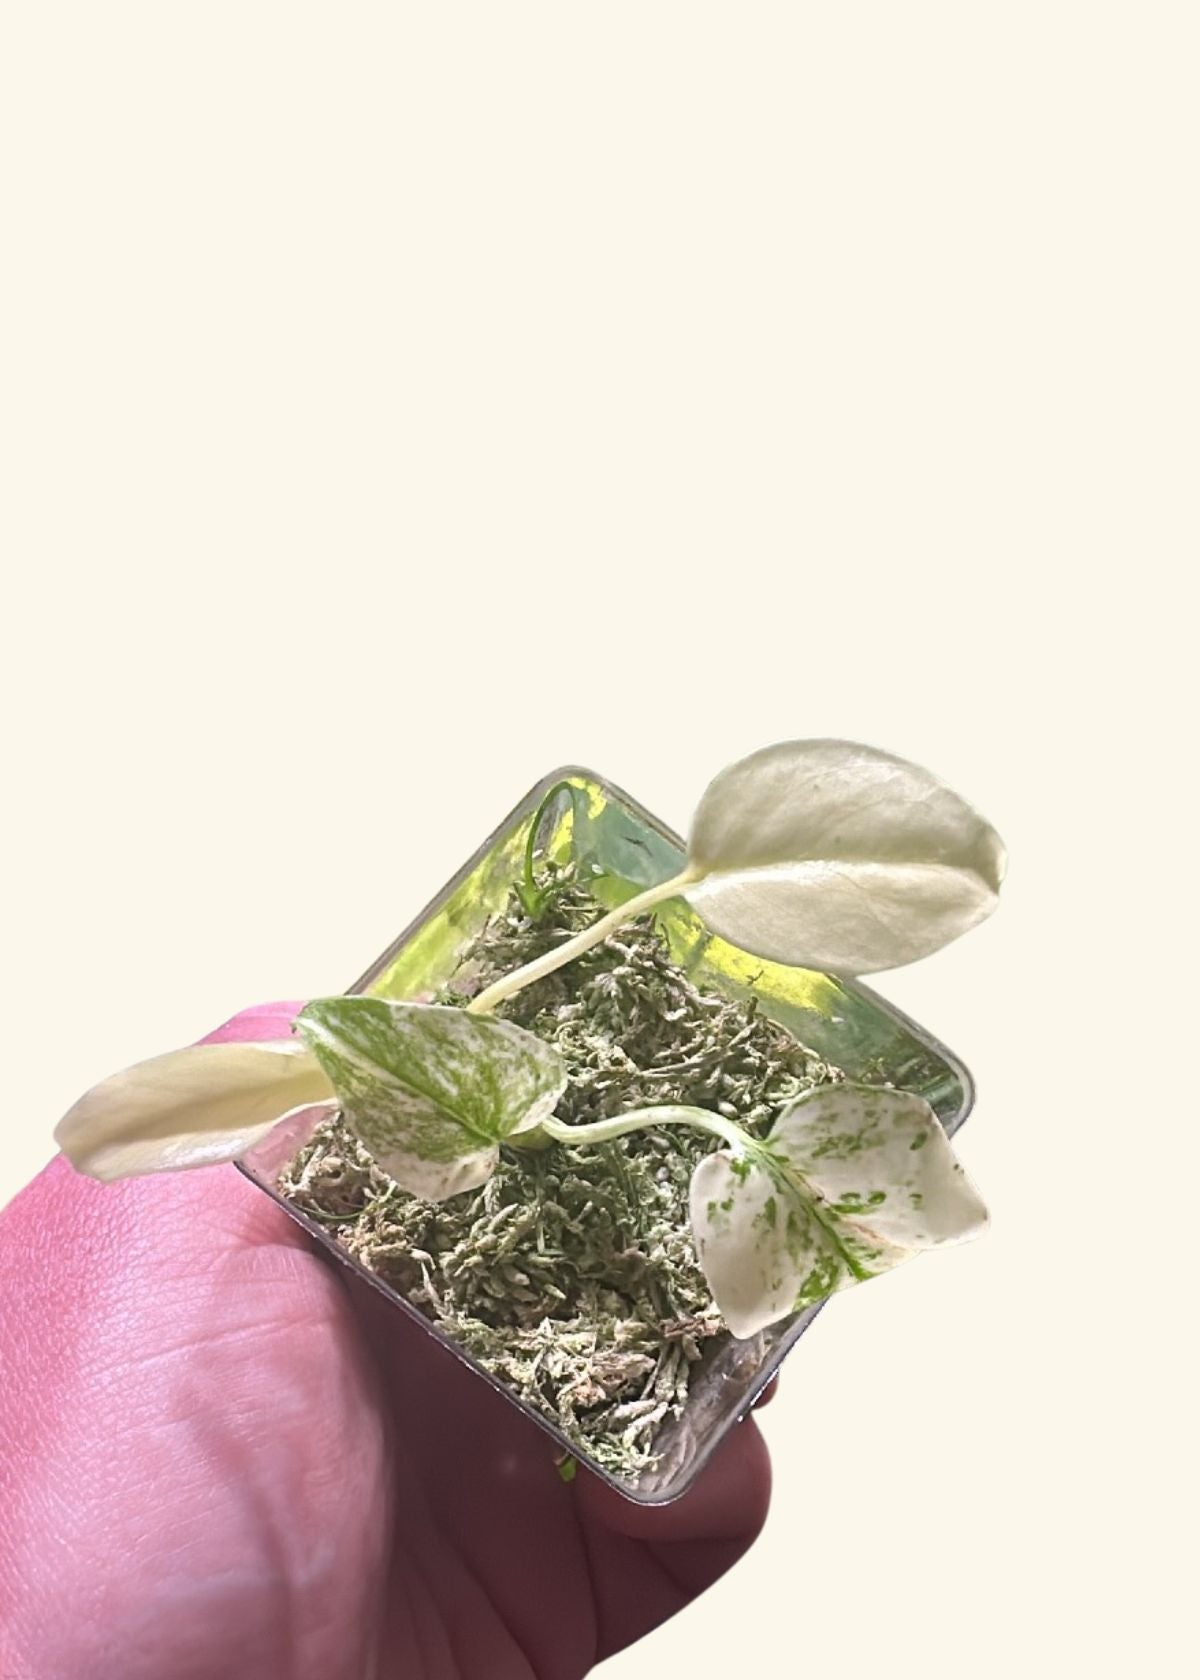 Monstera deliciosa variegata 'Mint' (Ultra rara)